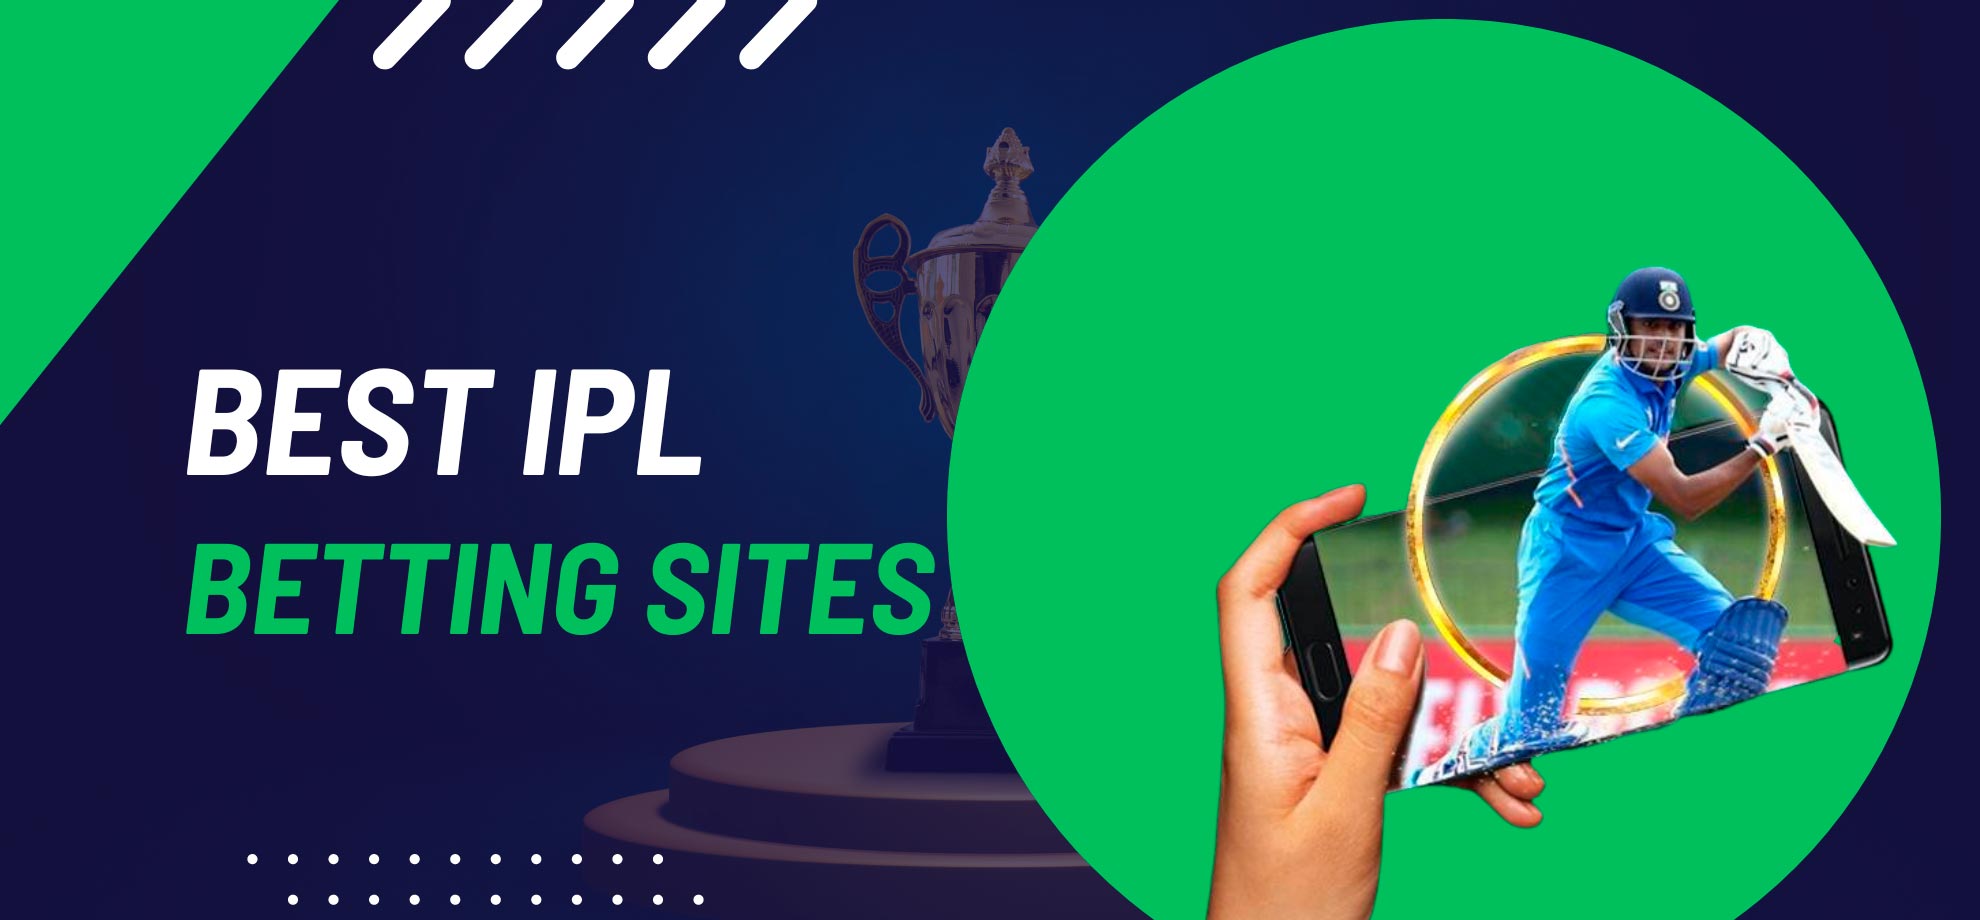 Best IPL betting sites